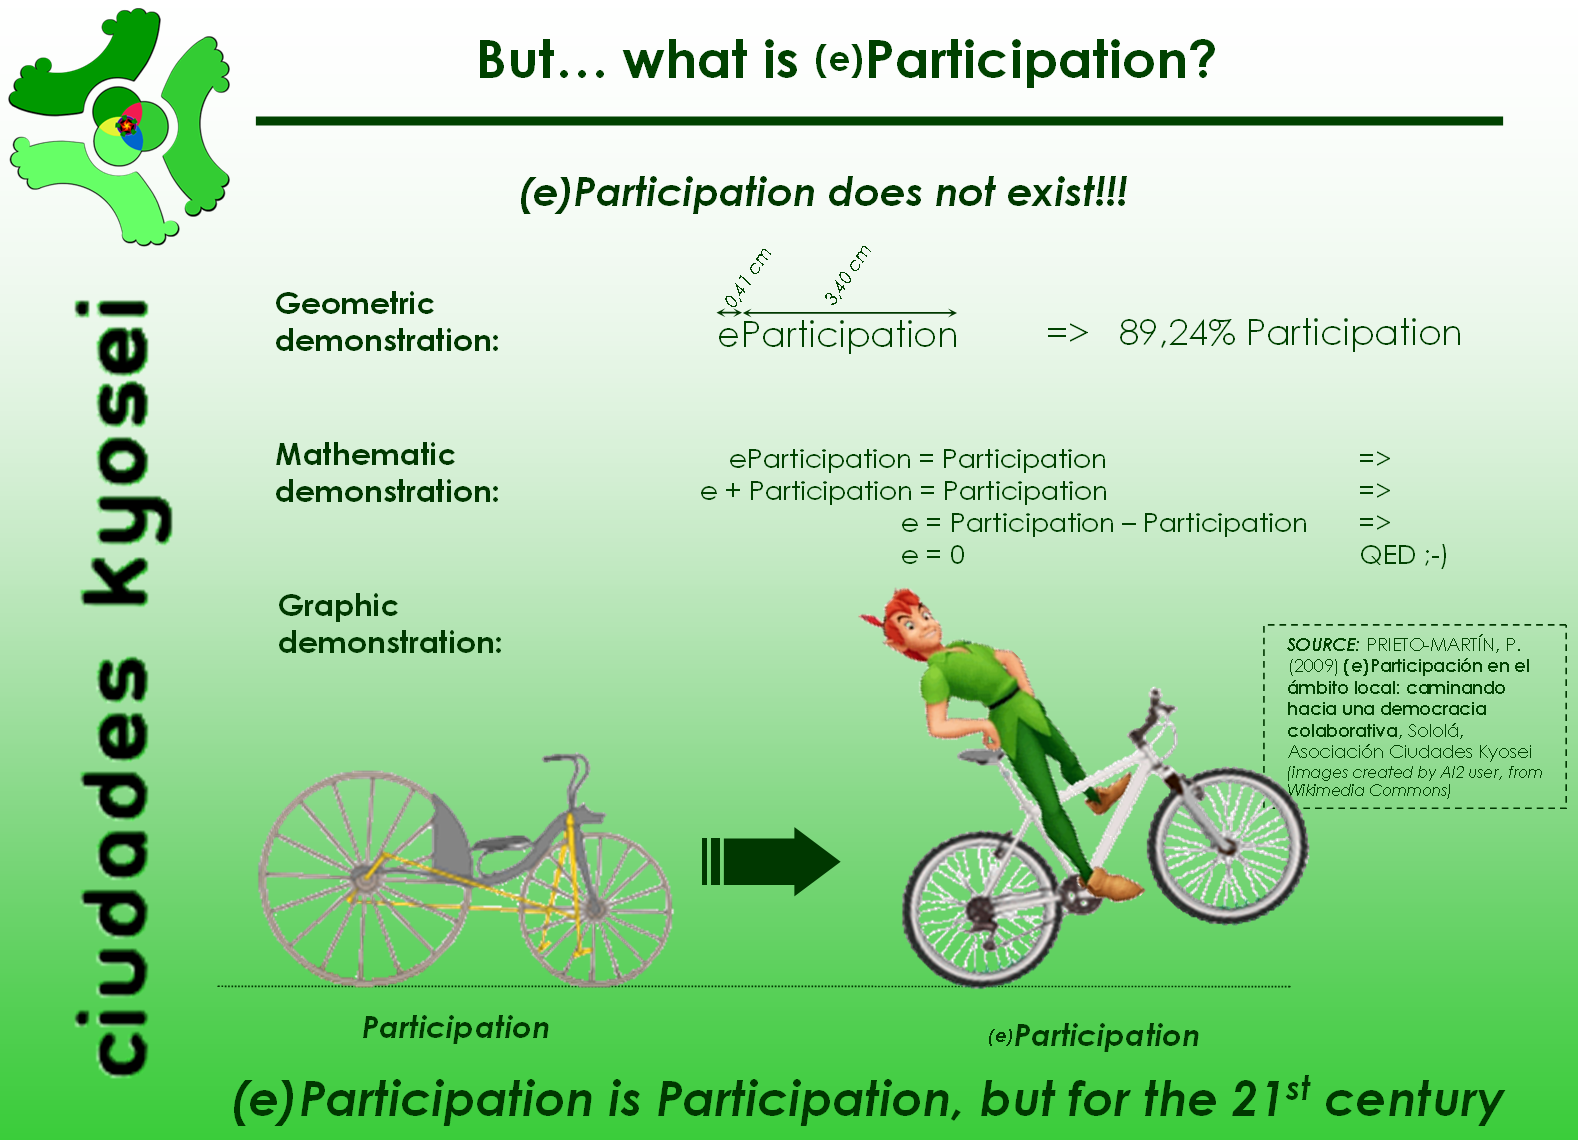 But... What is (e)Participation?